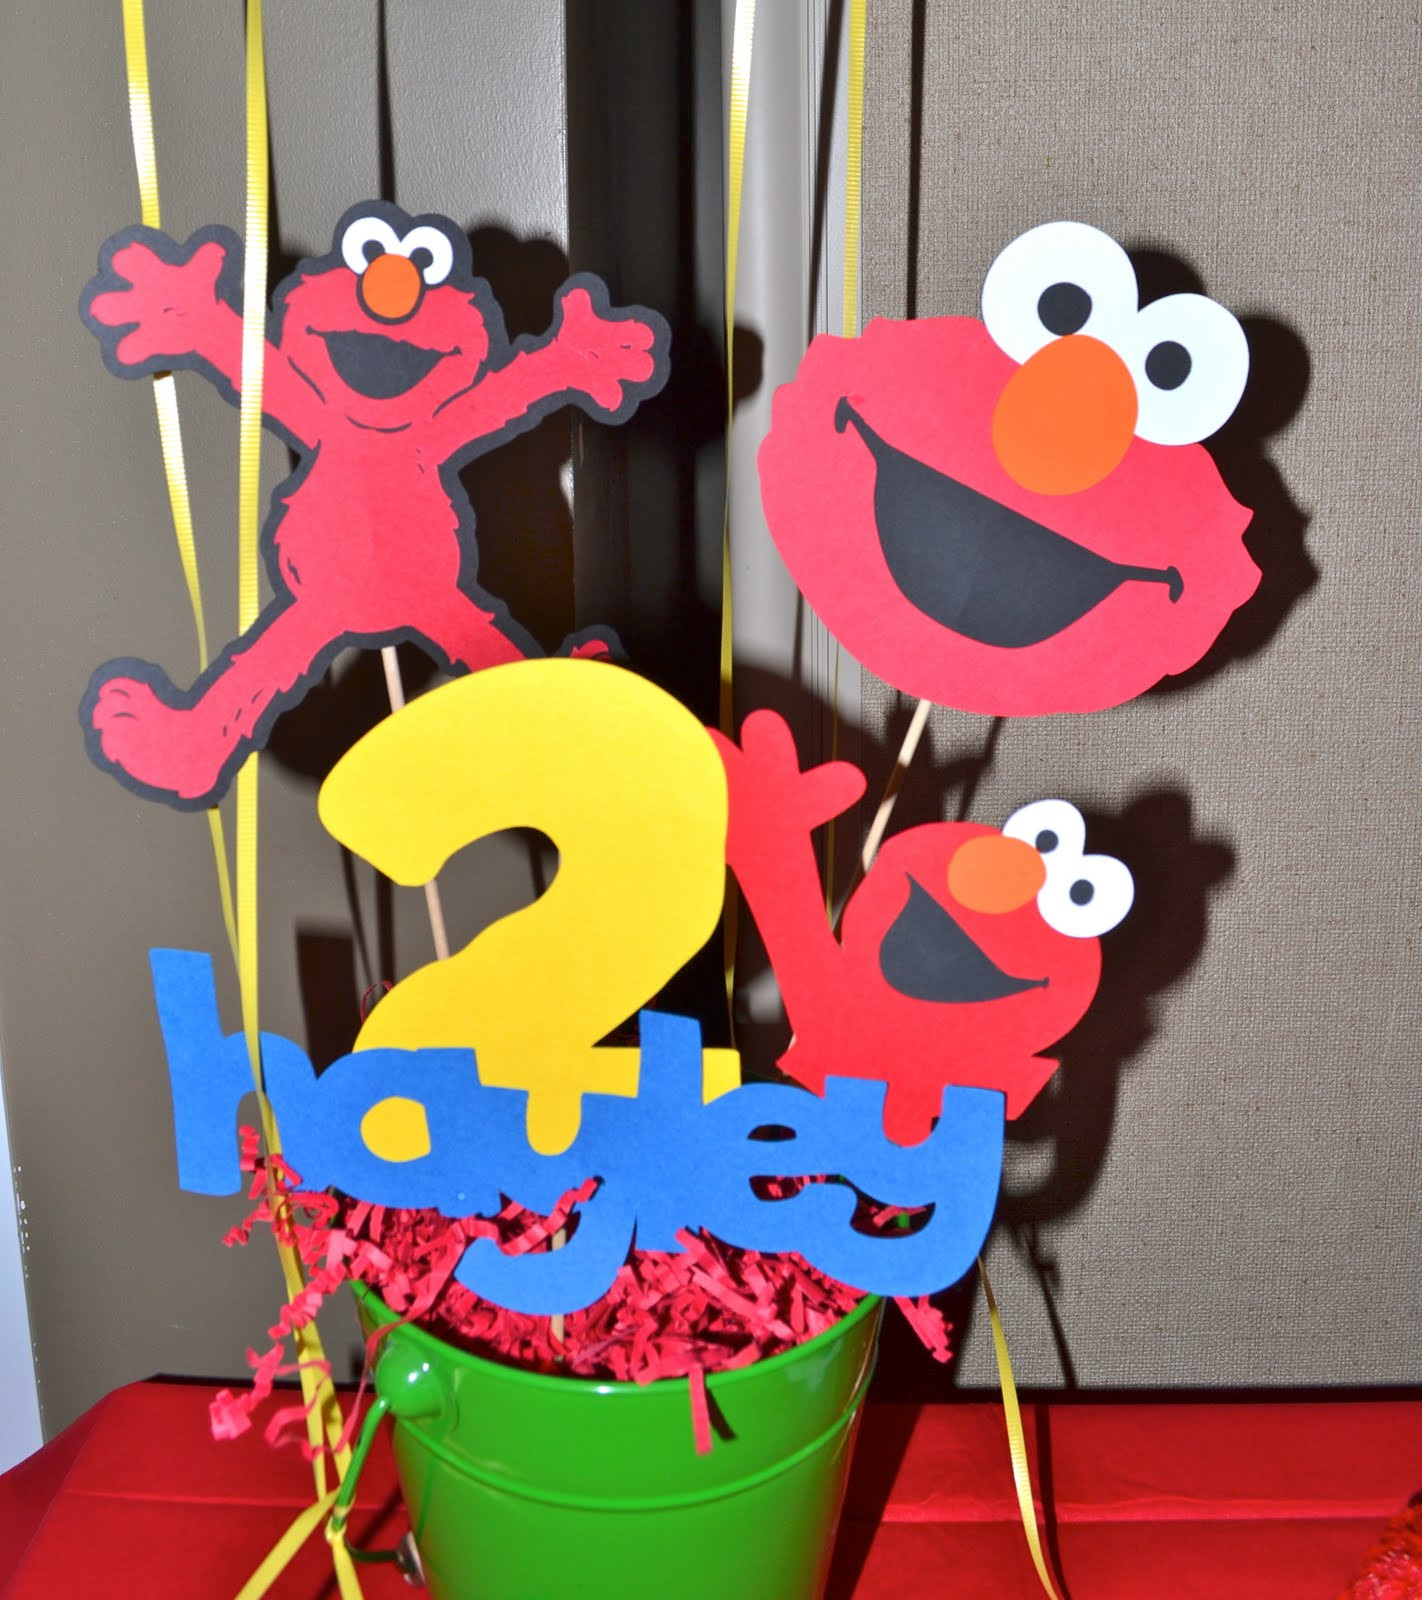 Elmo Themed Birthday Party Ideas
 Buggy s Basement Elmo Birthday Party